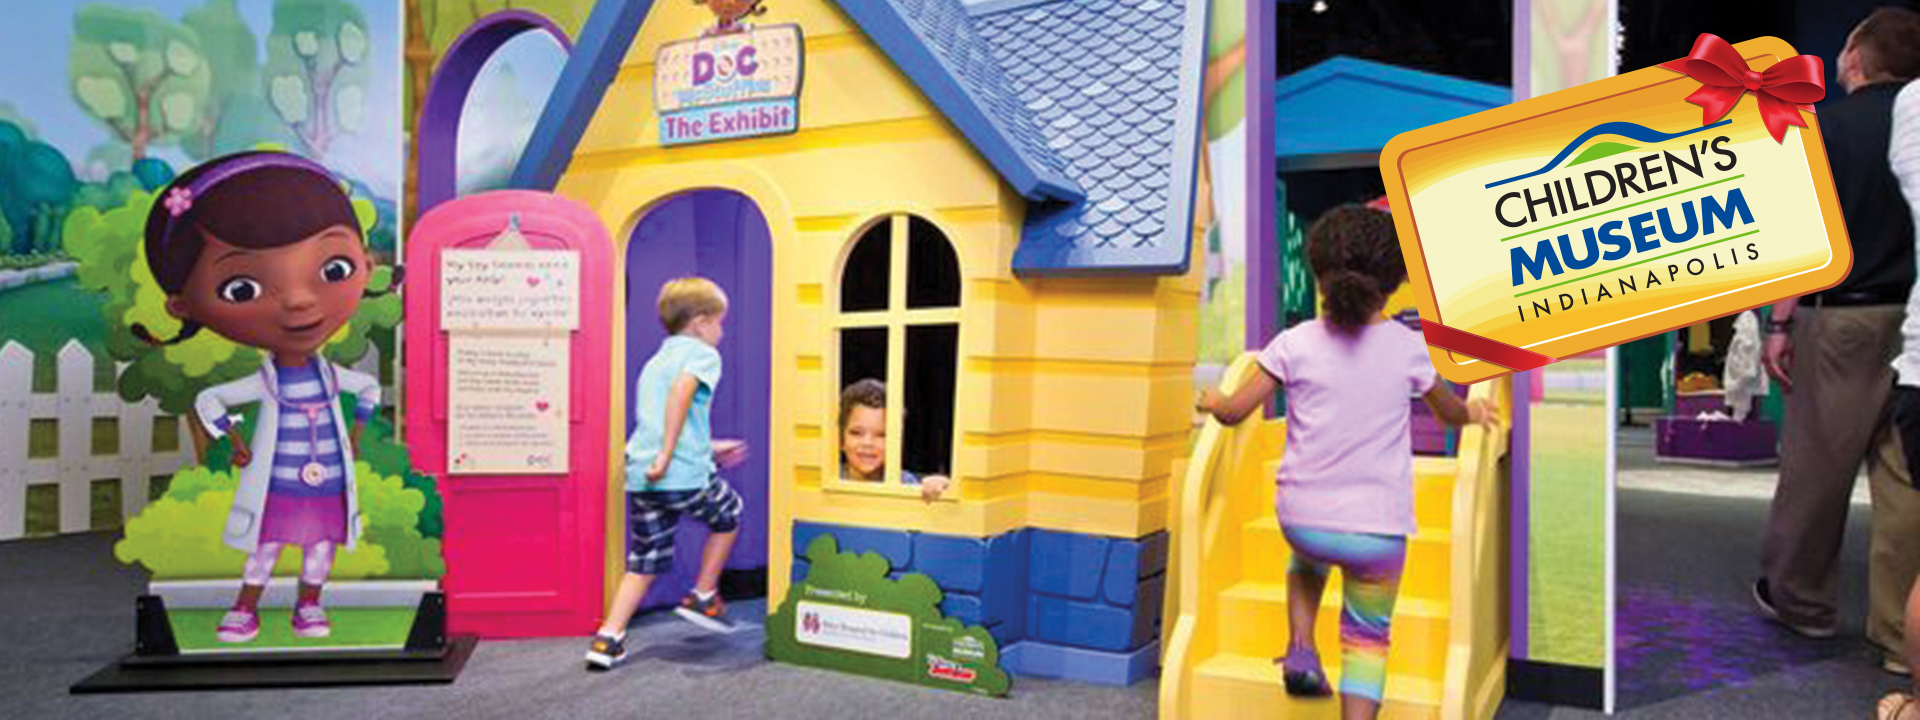 Doc McStuffins exhibit image featuring the McStuffins toy hospital with children